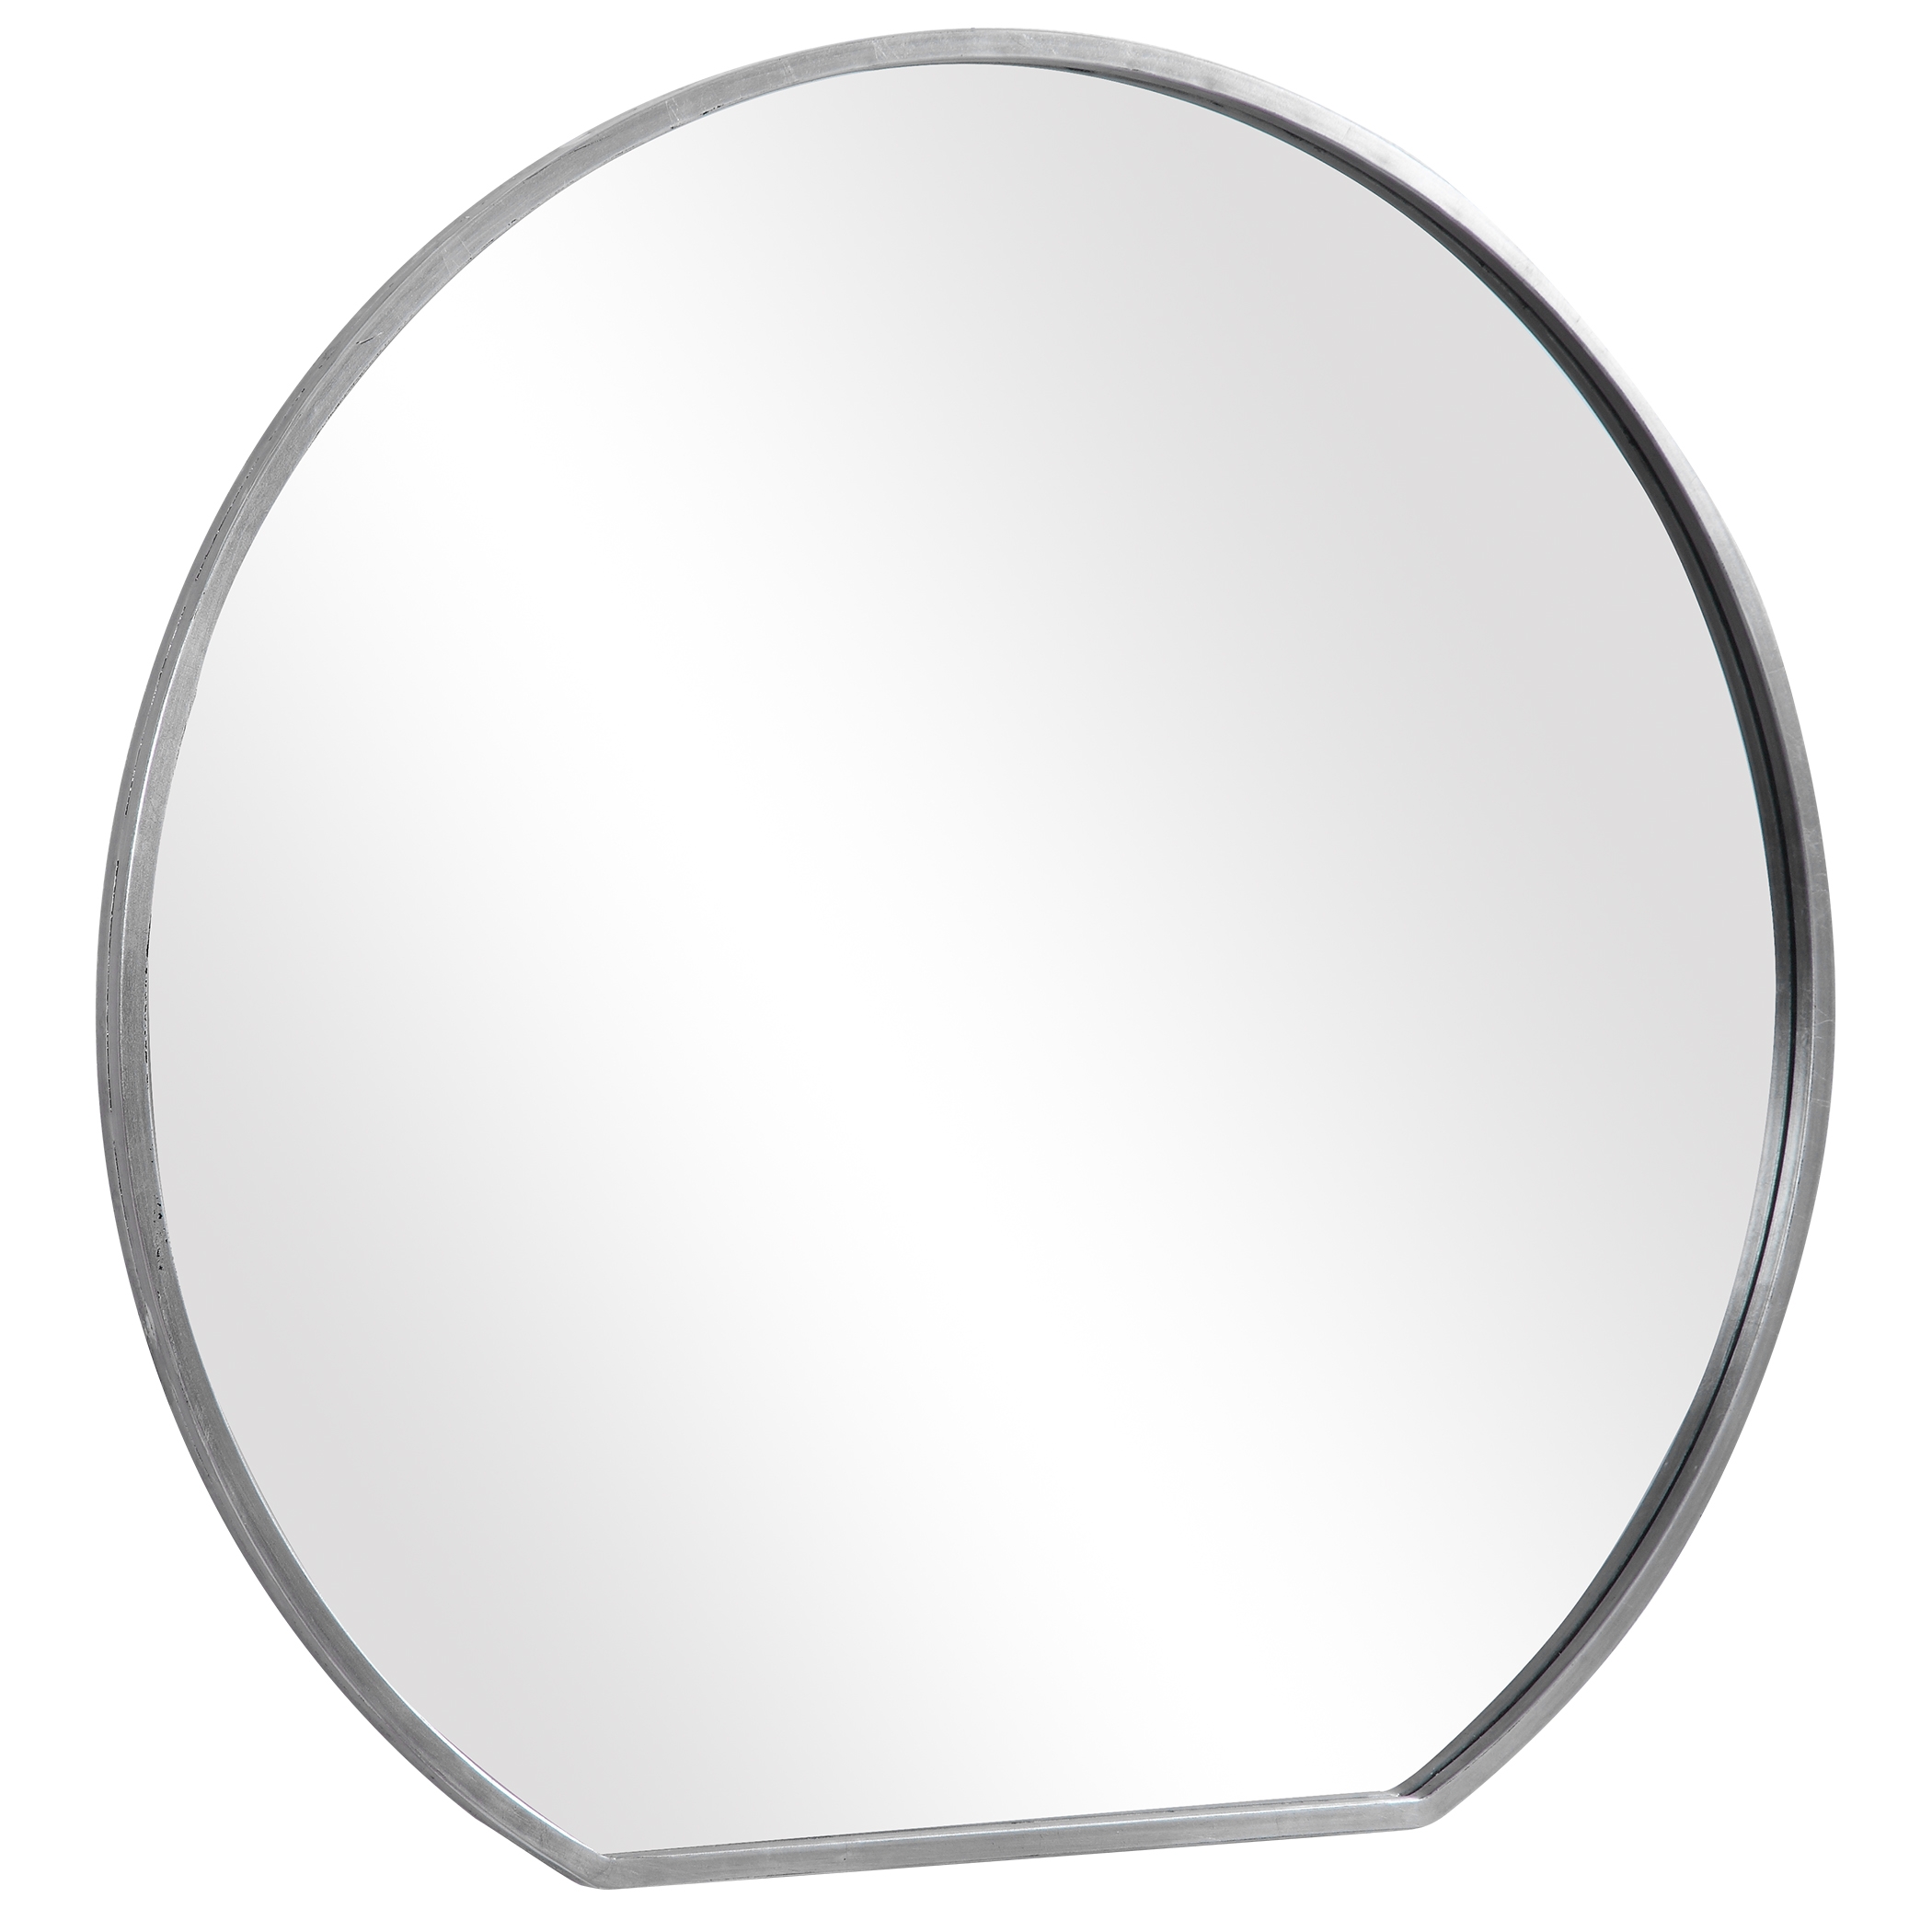 Alondra Mirror - Image 2